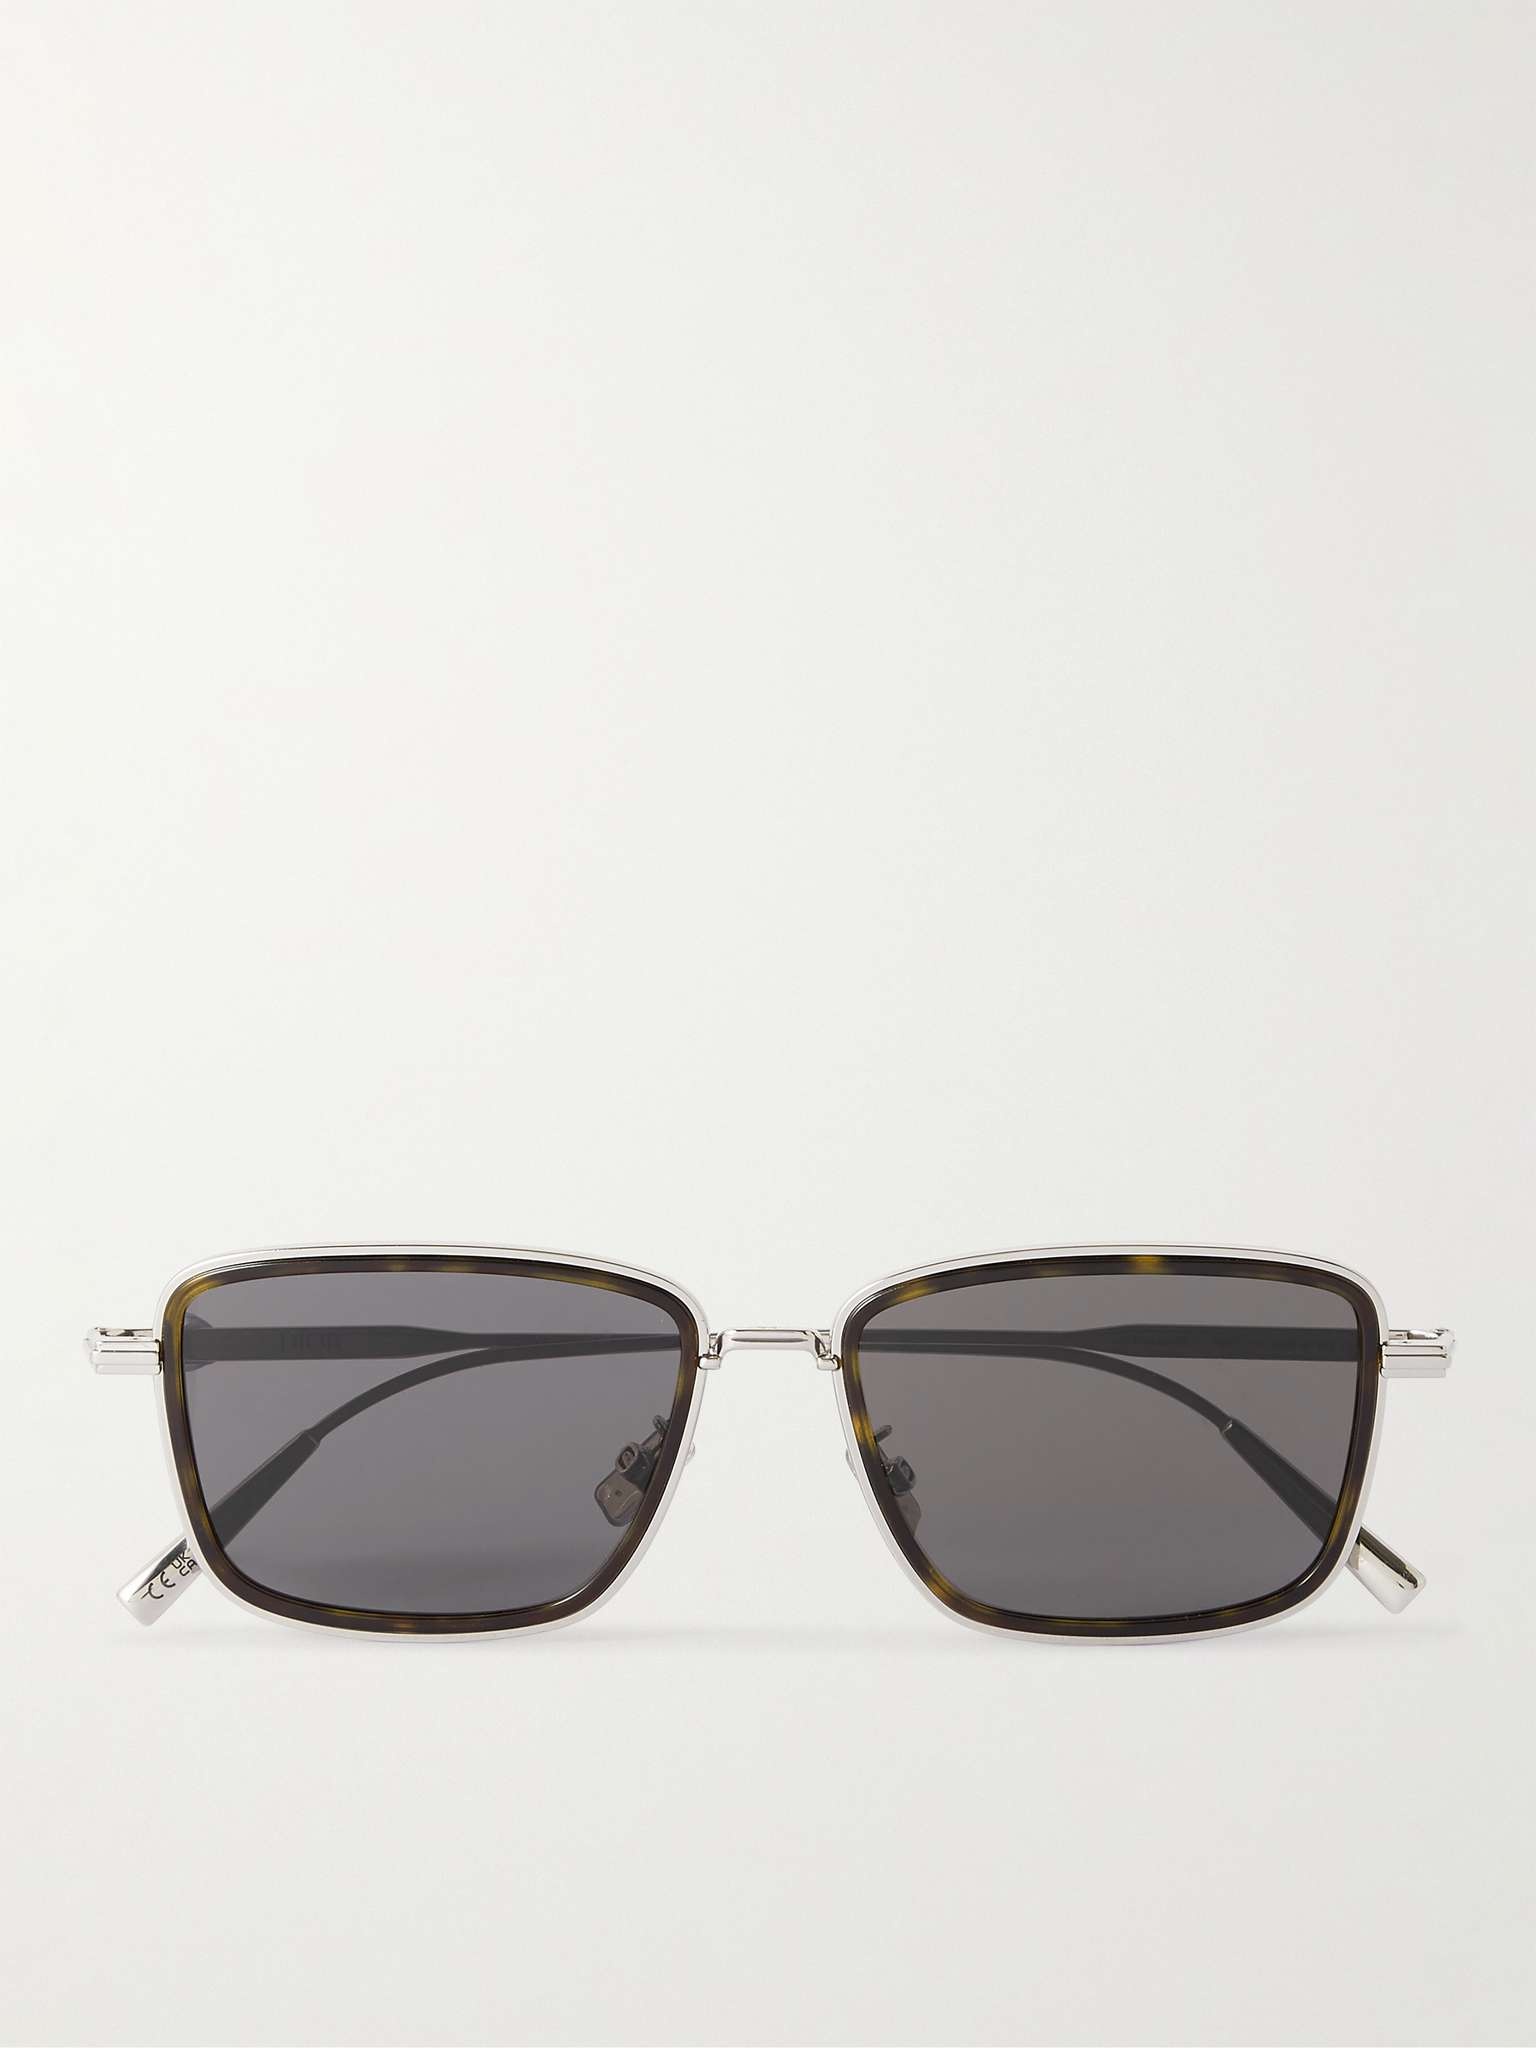 DiorBlacksuit S9U Silver-Tone and Tortoiseshell Acetate D-Frame Sunglasses - 1